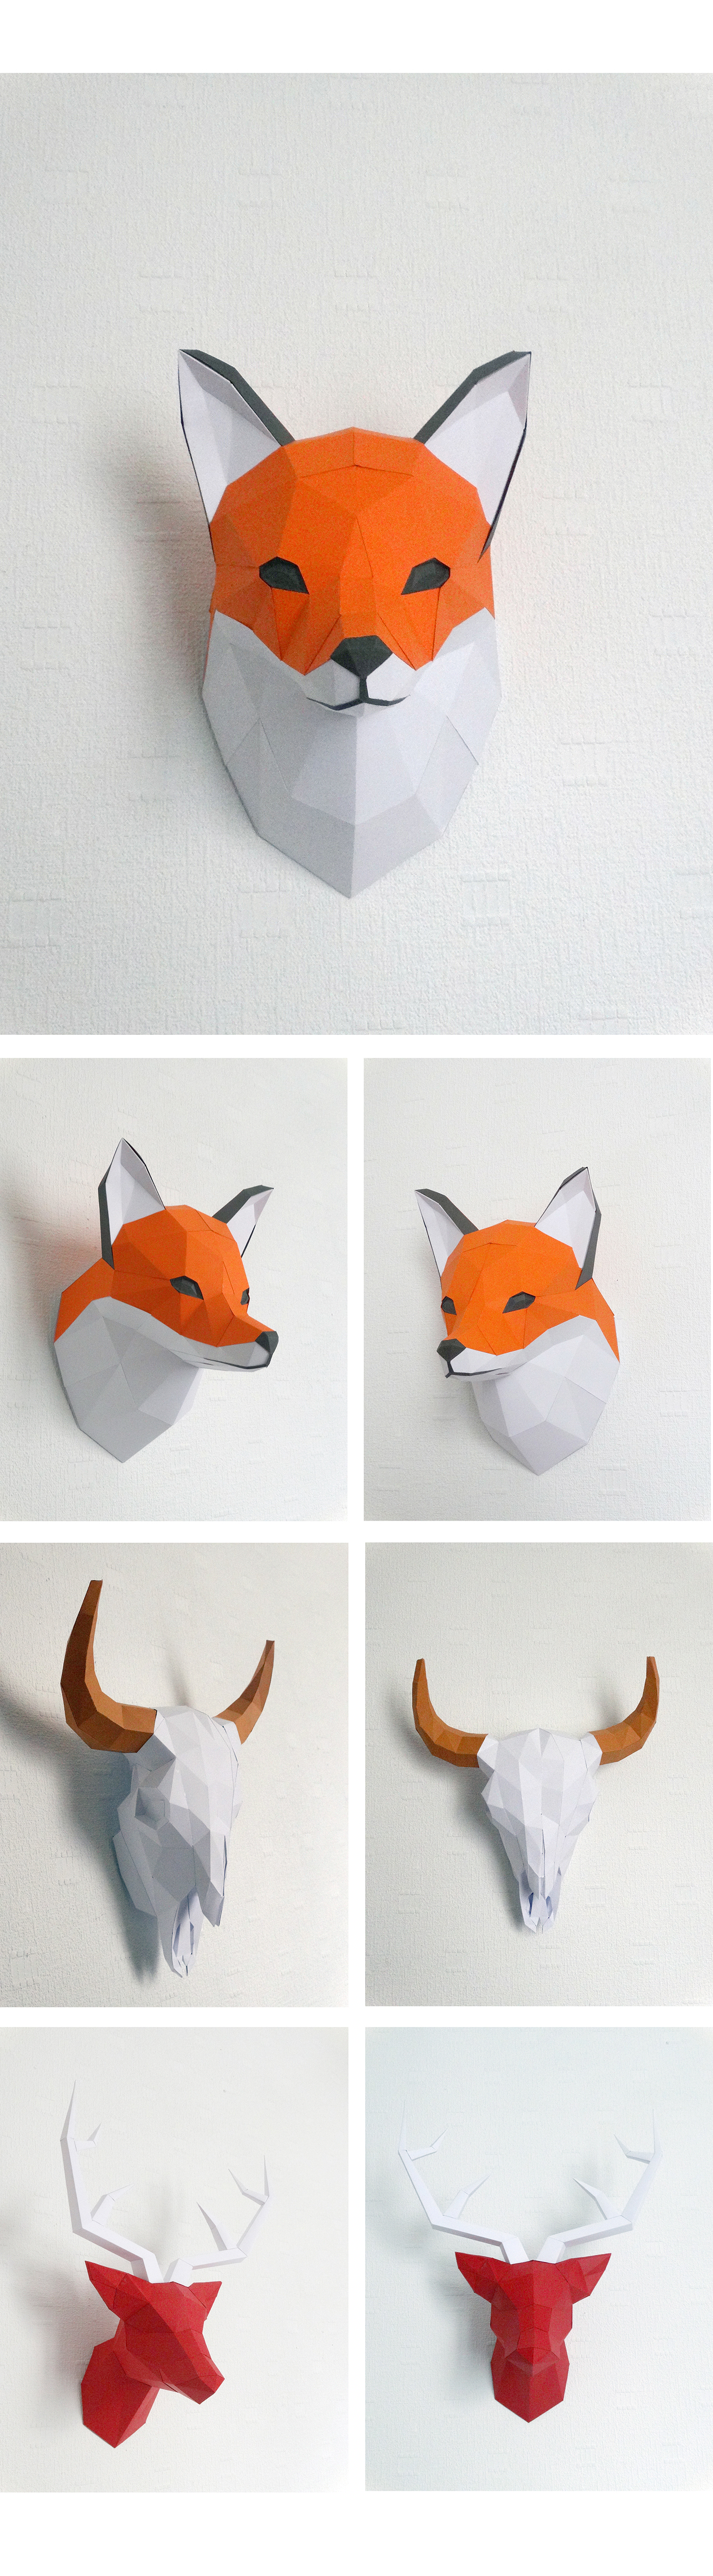 sculpture animals polygon paper